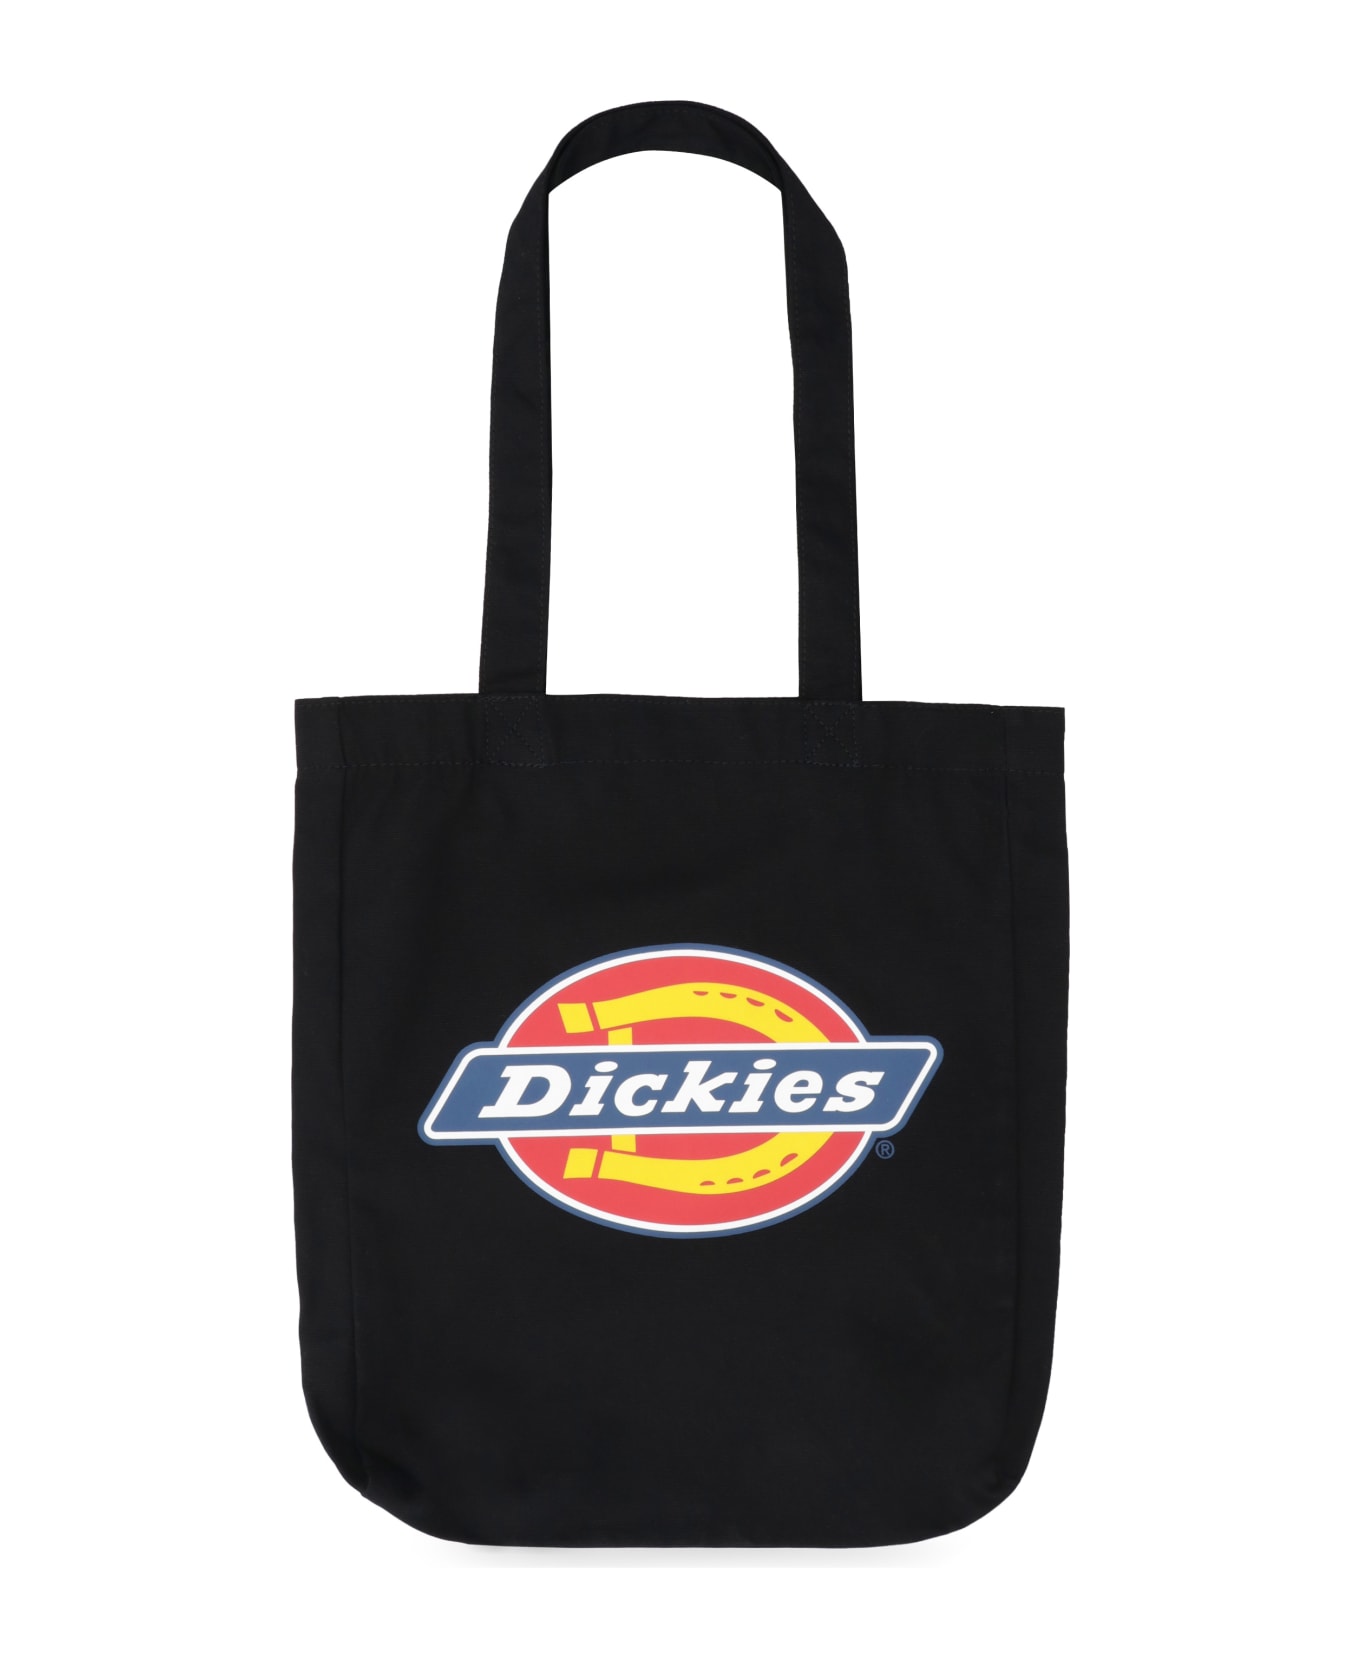 Dickies Icon Canvas Tote Bag - black